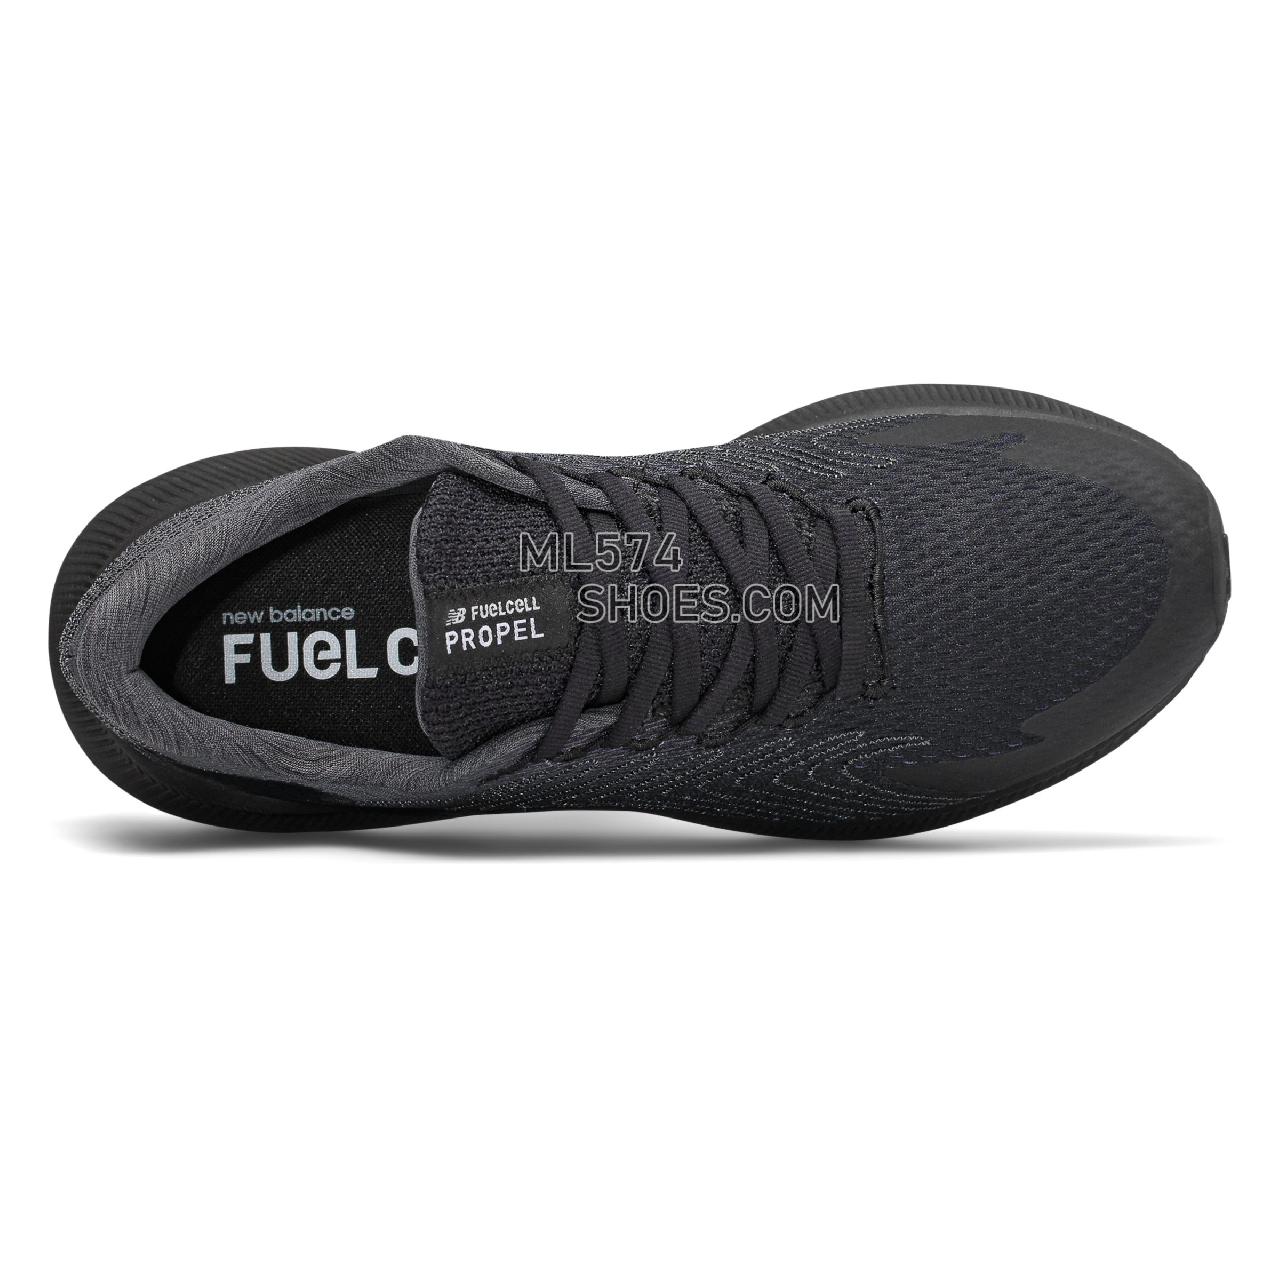 New Balance FuelCell Propel - Men's Neutral Running - Black - MFCPRCK